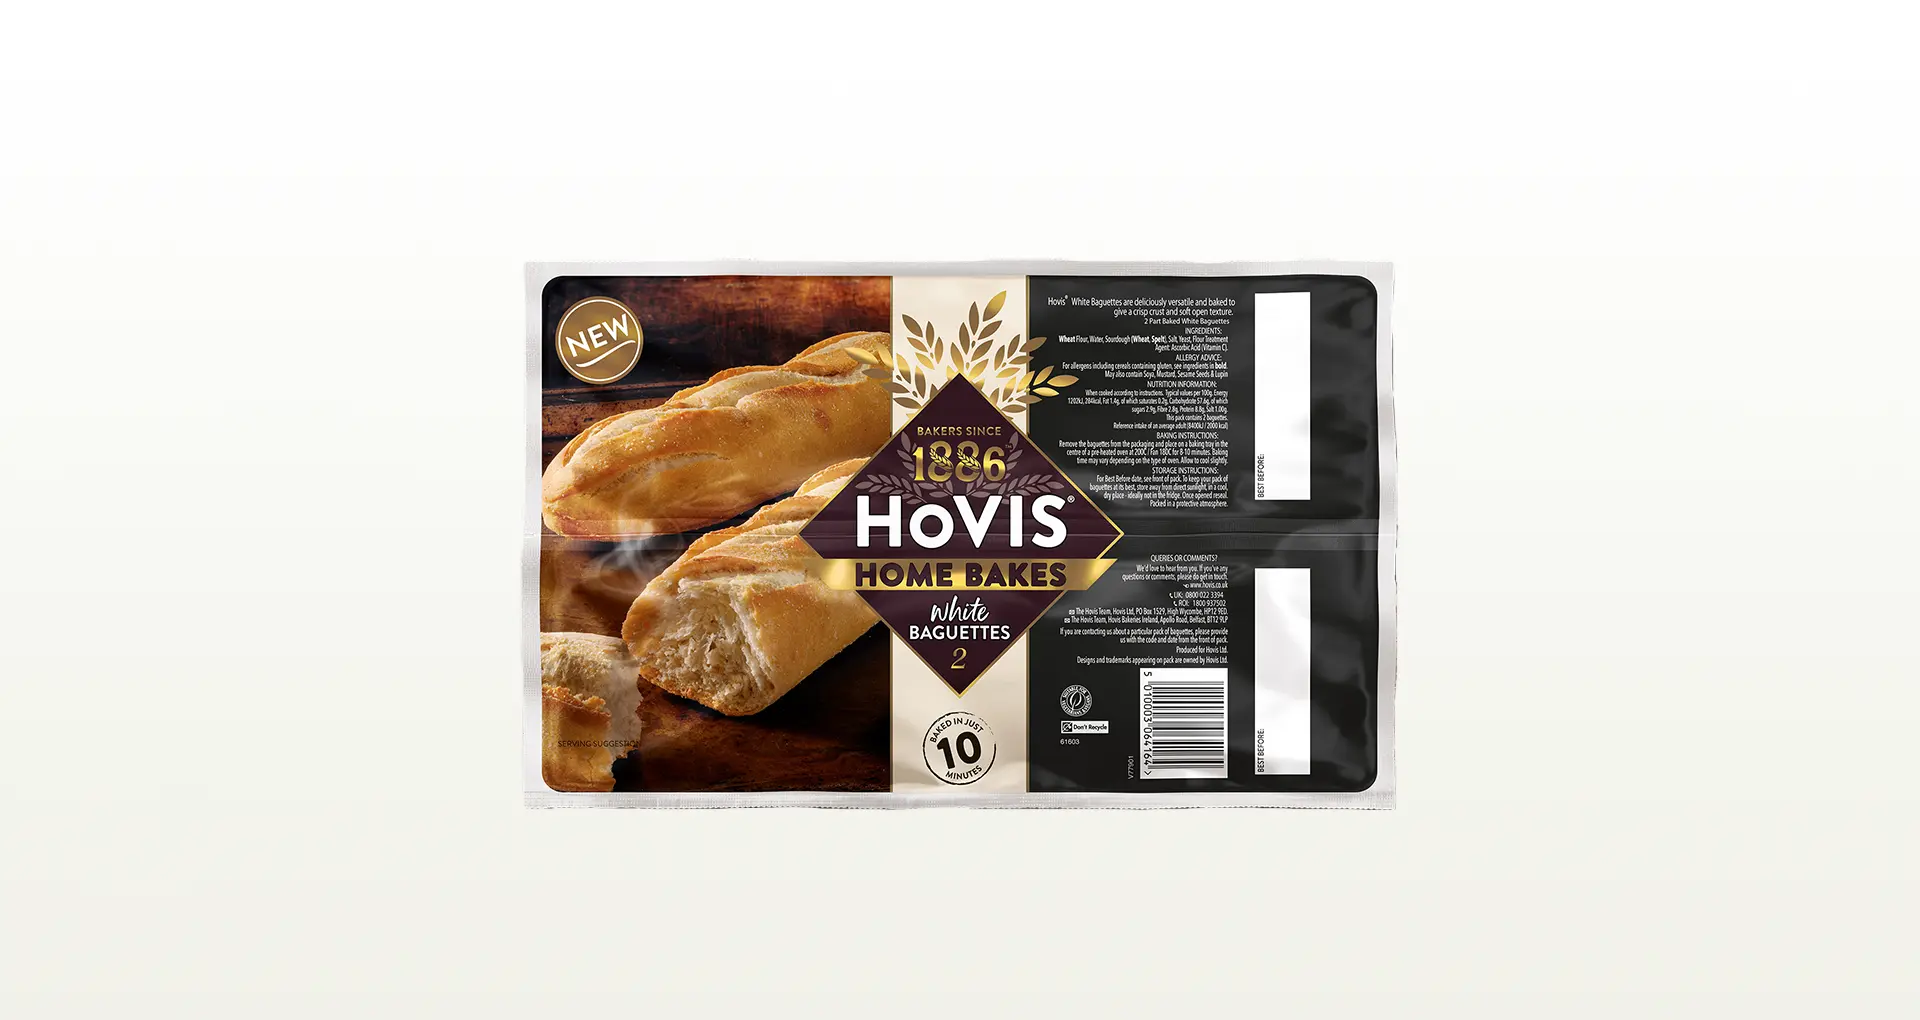 Hovis Home Bakes White Baguettes